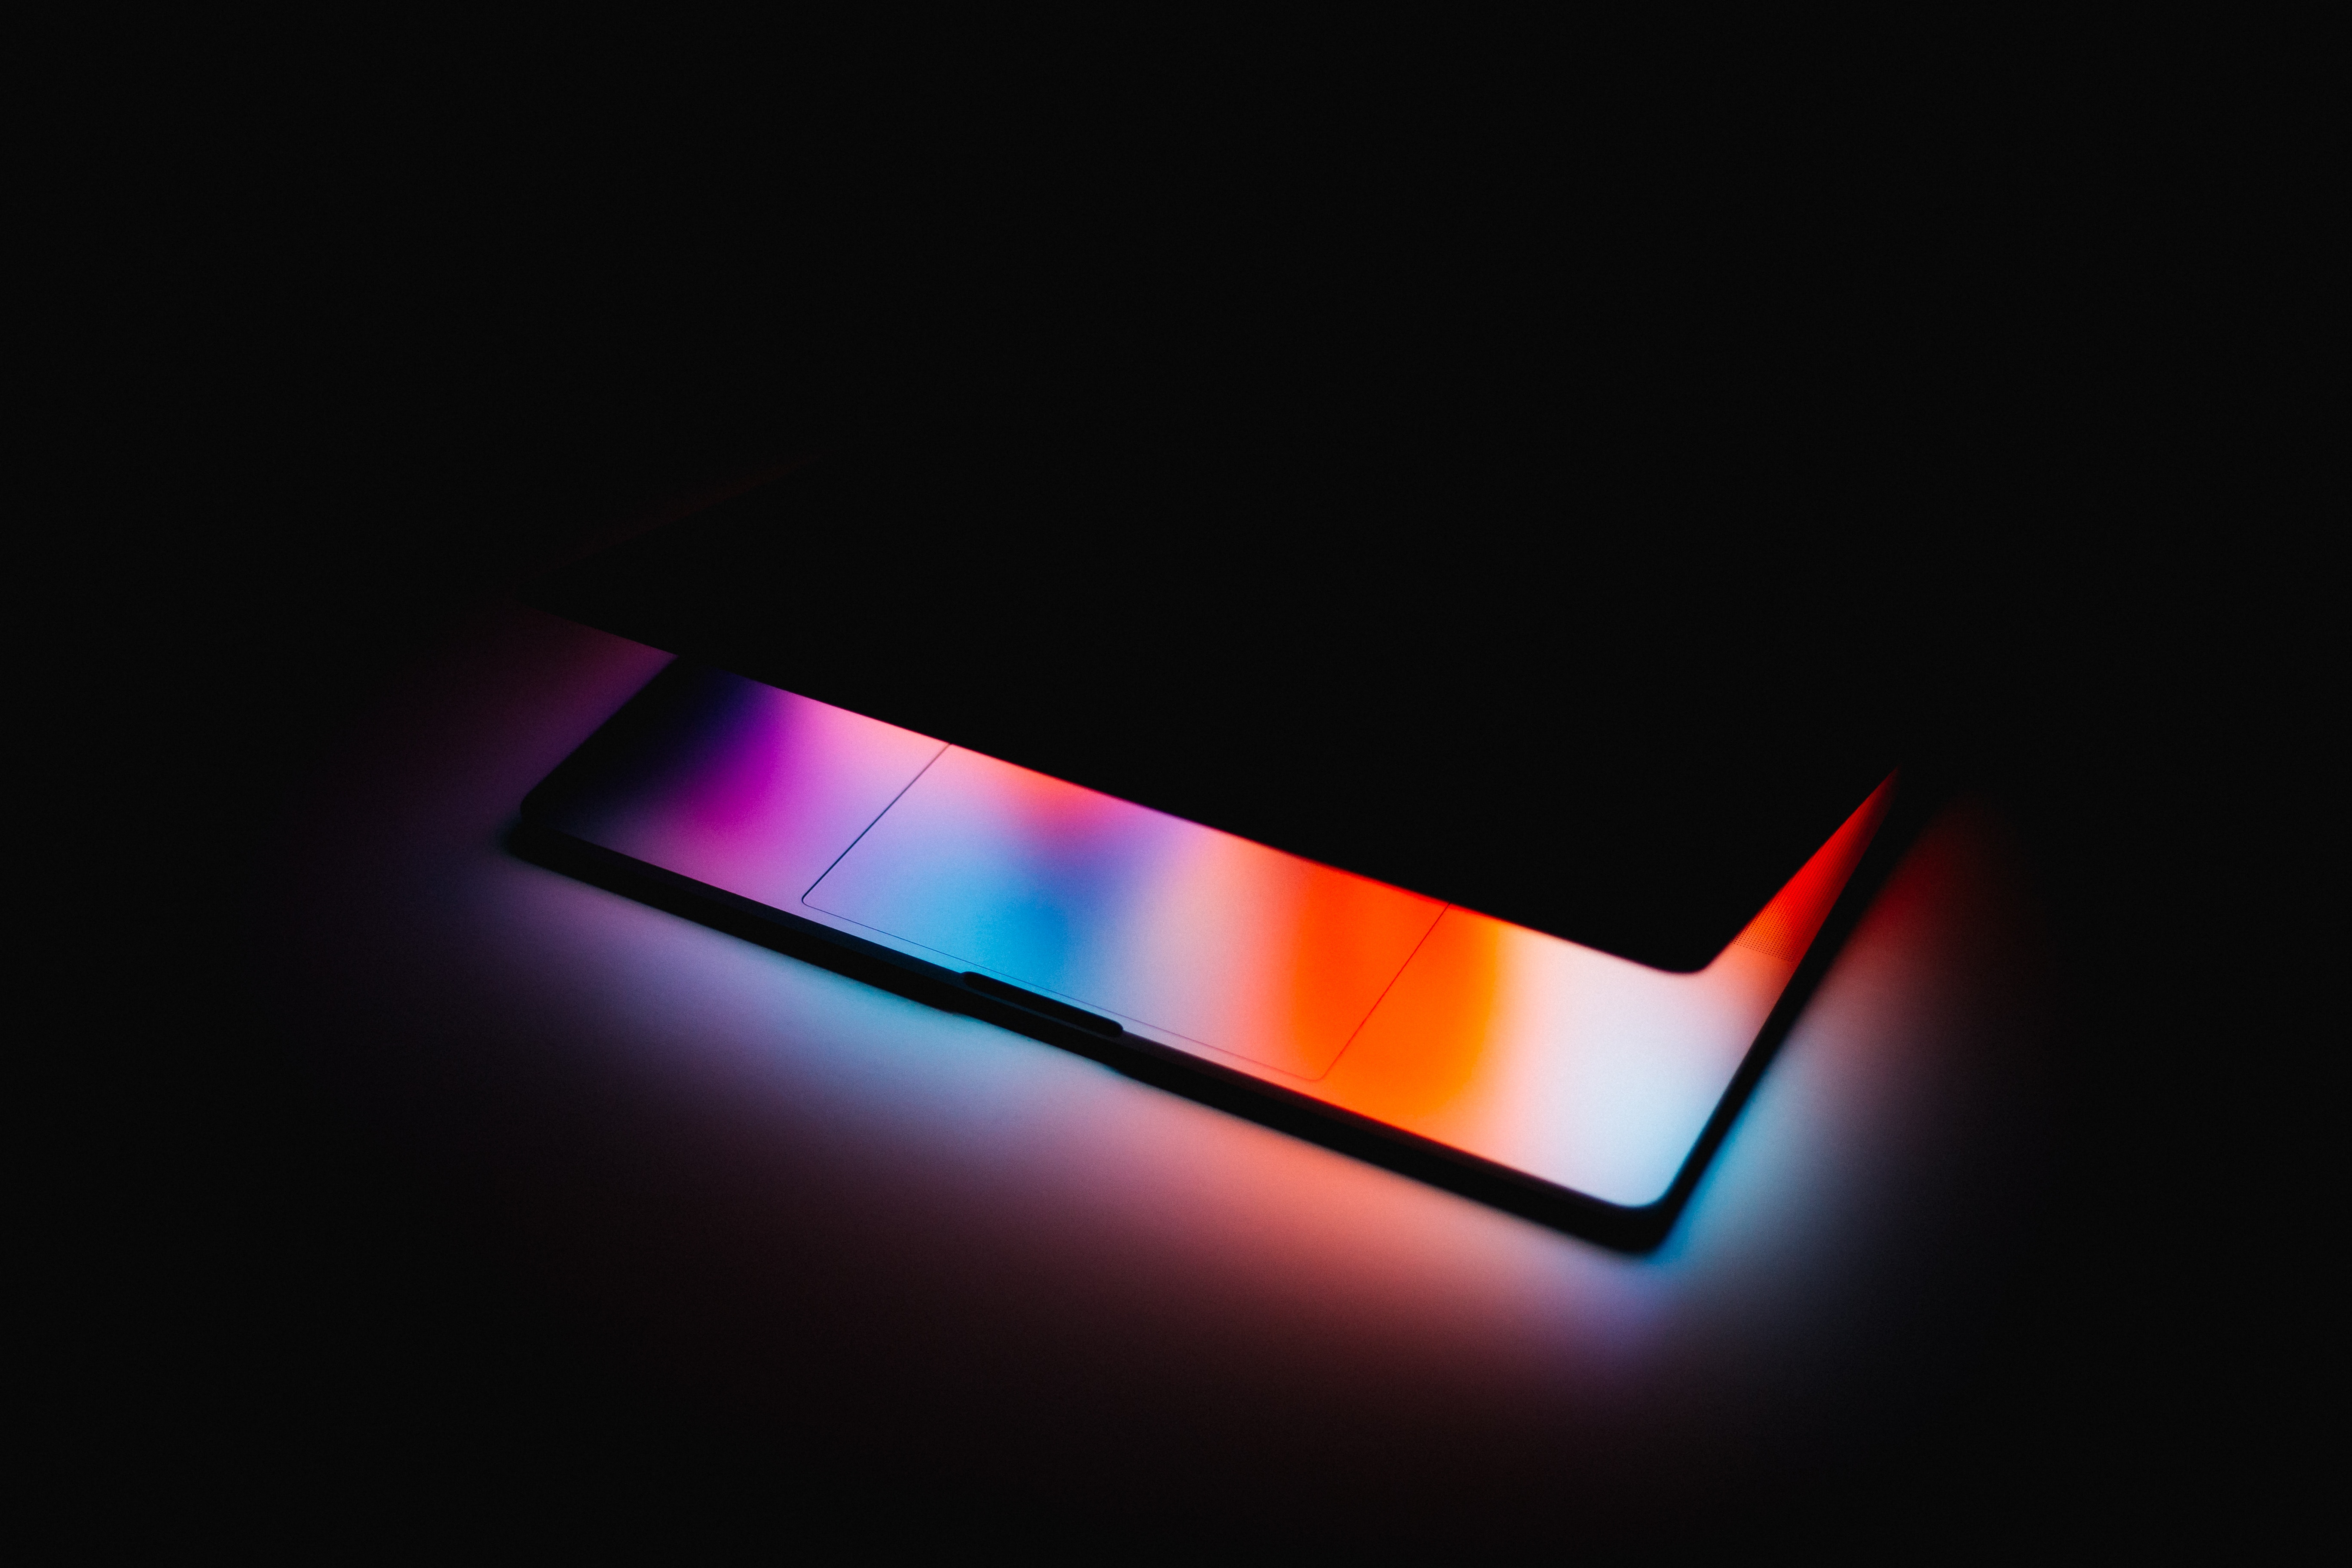 Slightly opened laptop displaying color on keyboard in dark room